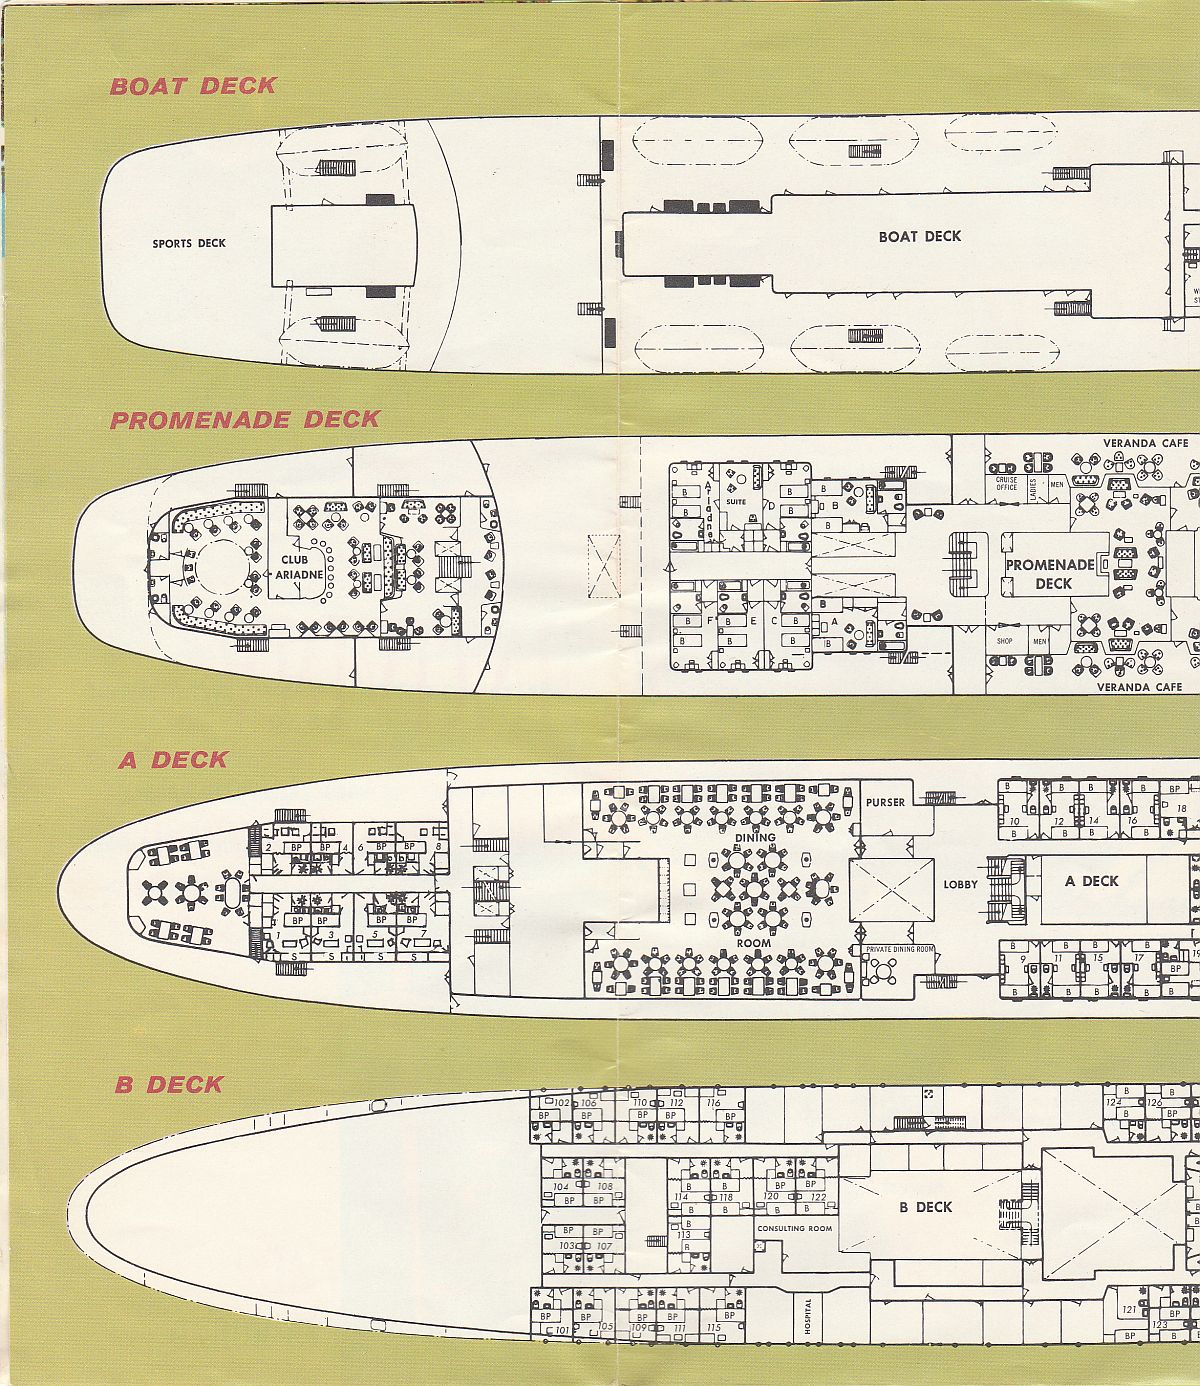 ss Ariadne Deck plan: Boat, Promenade, A and B-Decks;  (Top left page)